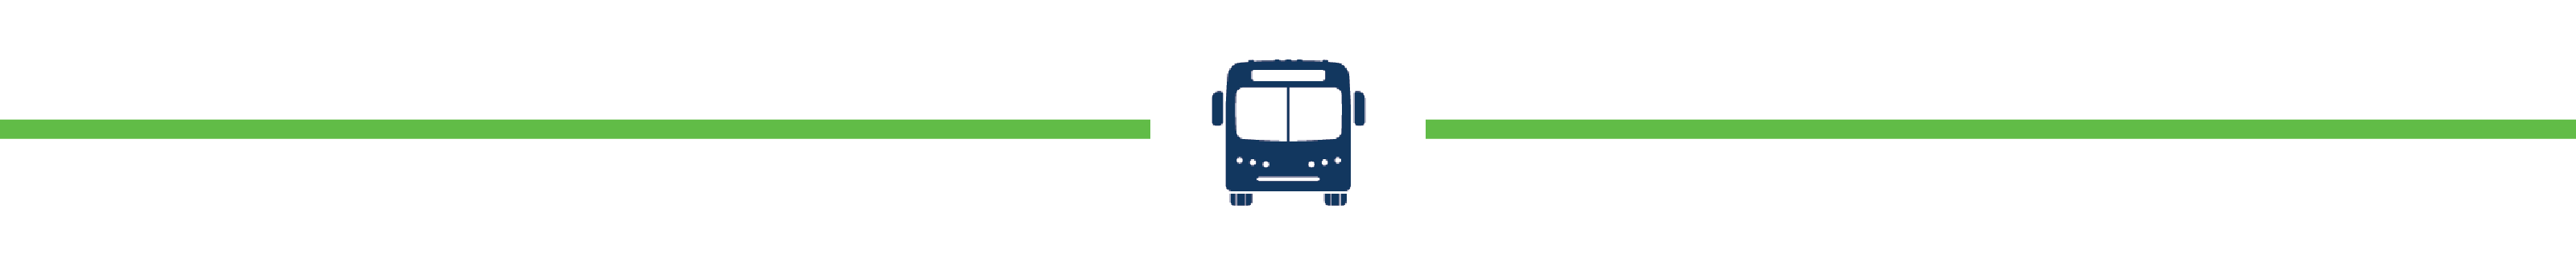 Bus icon representing transit